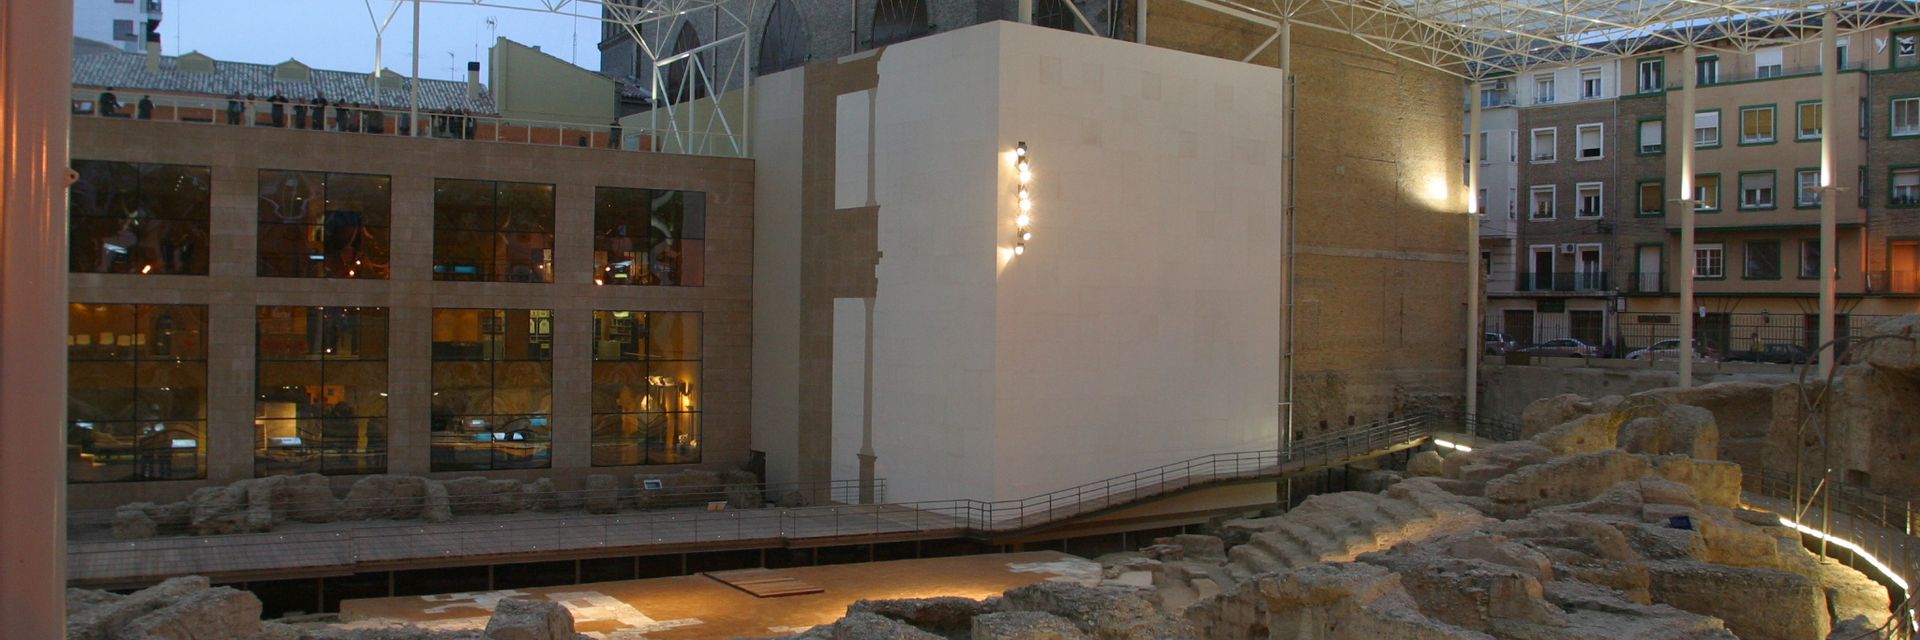 Caesaraugusta Theater Museum